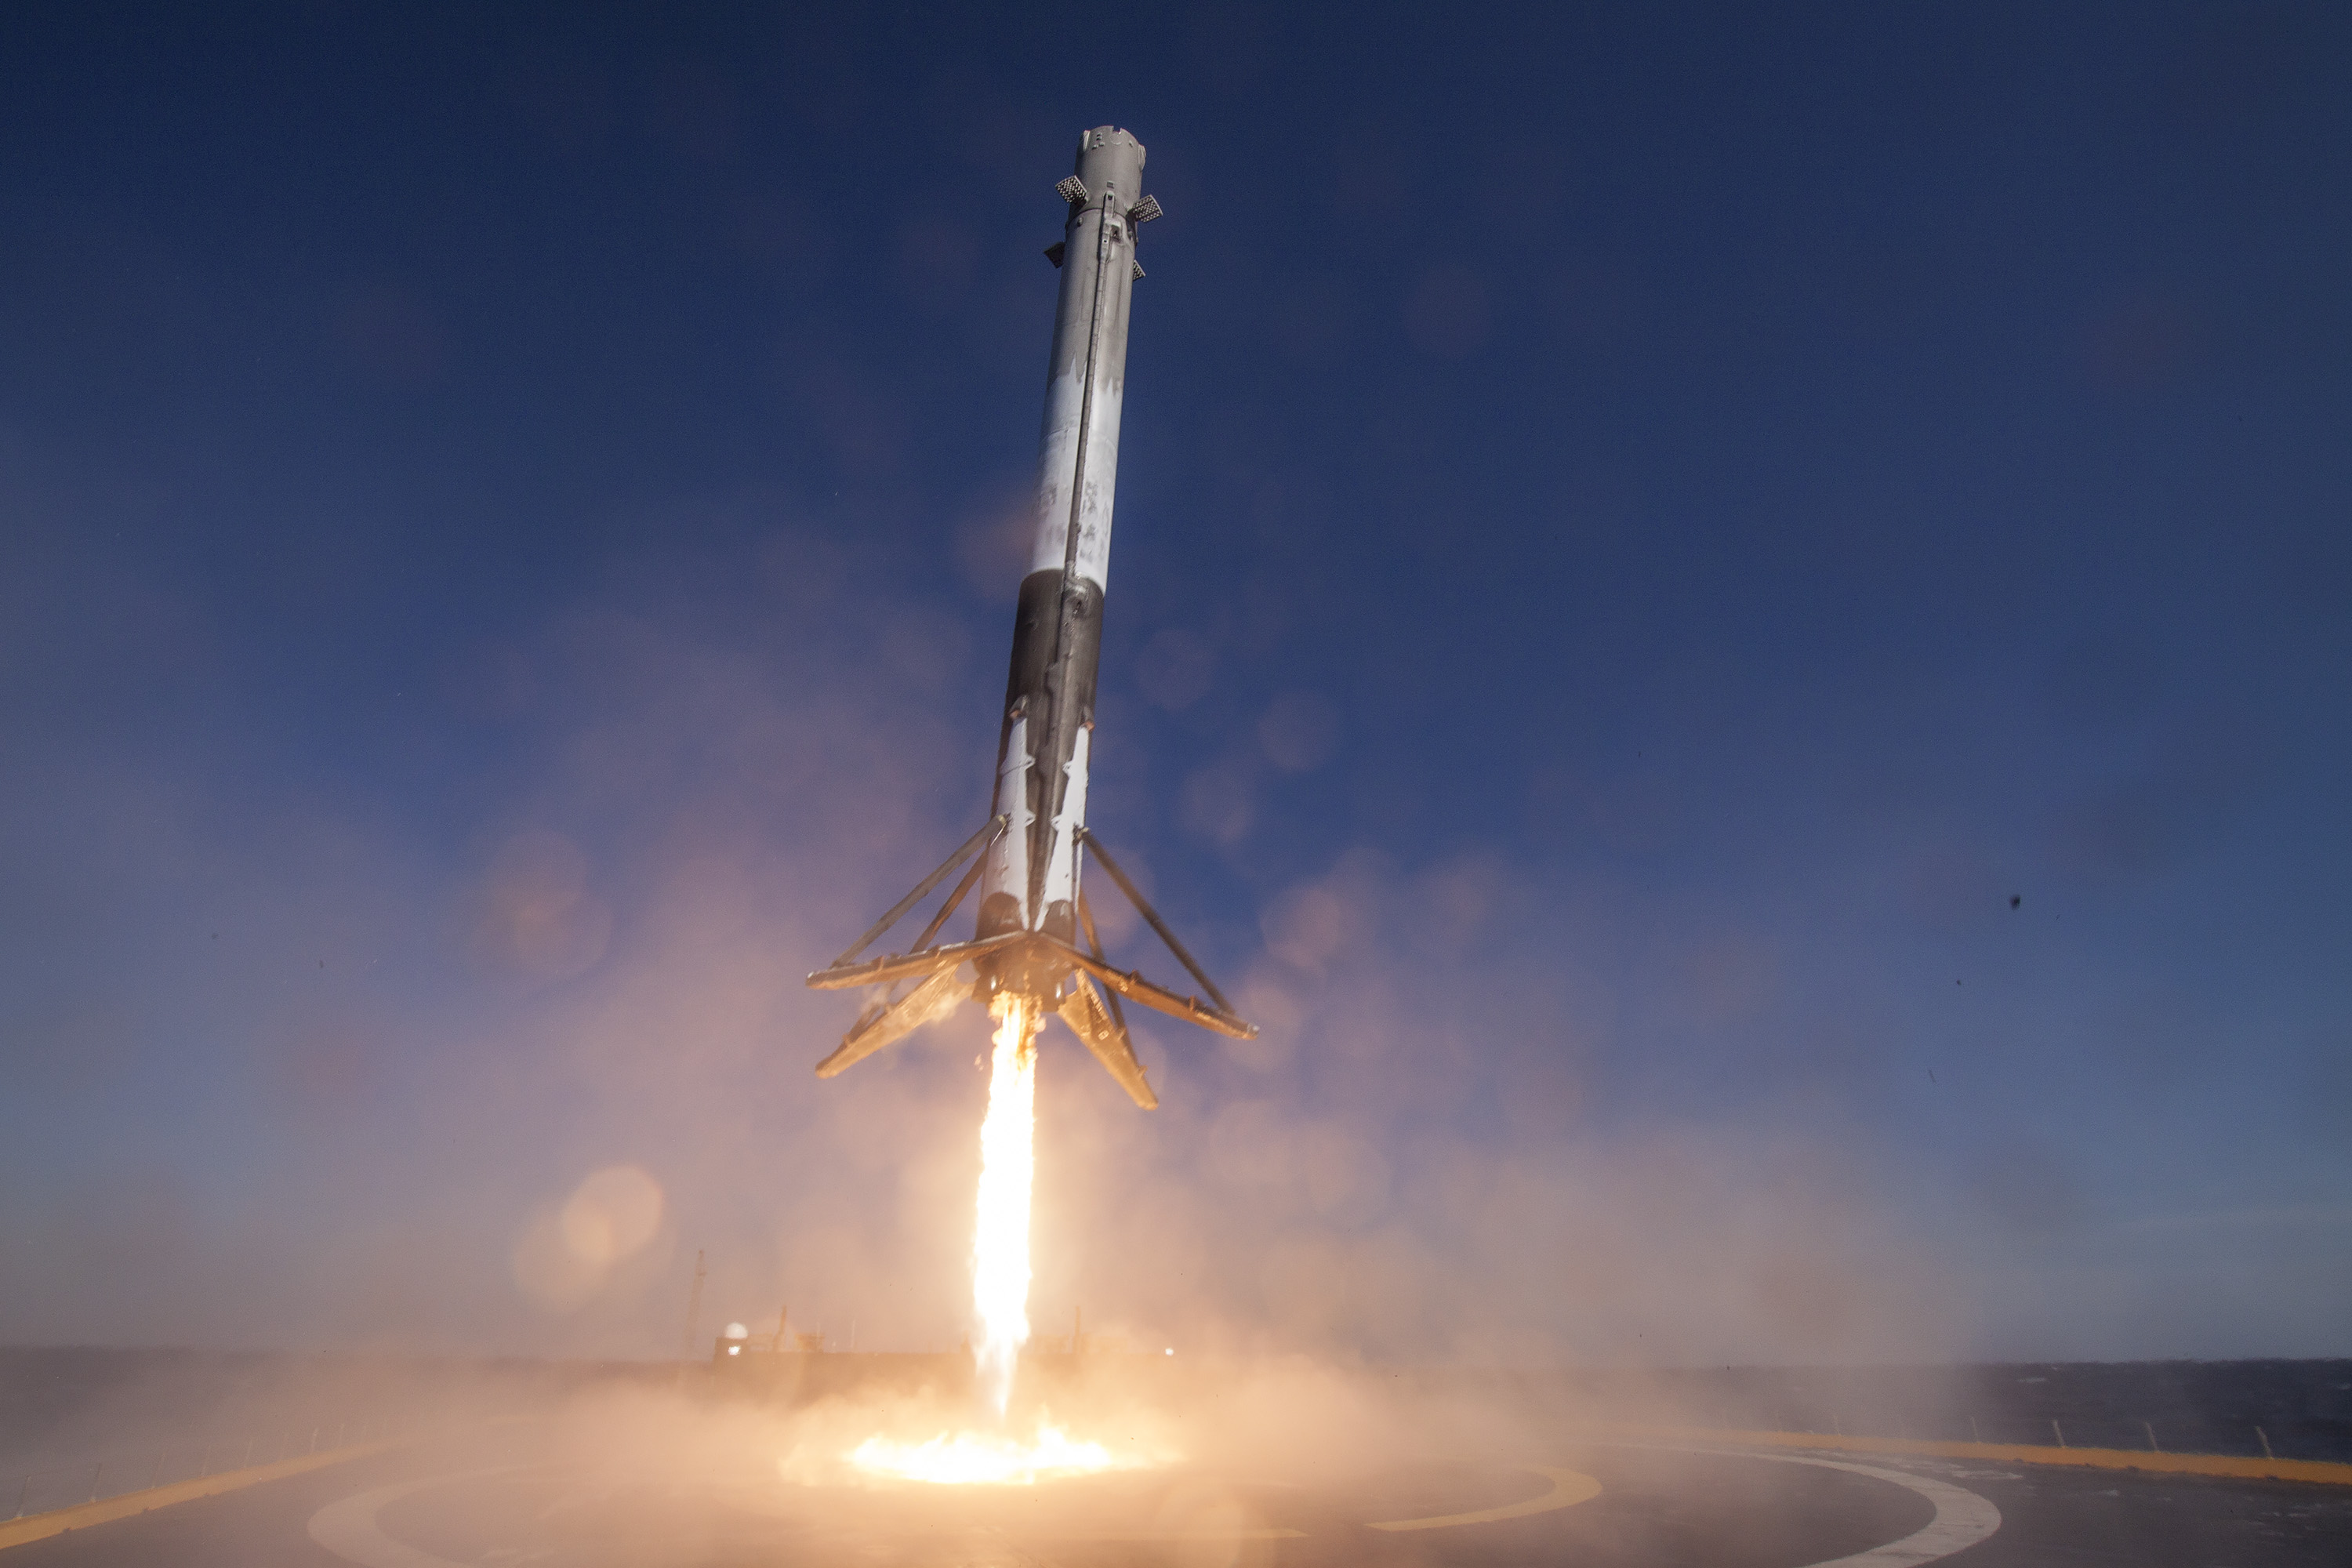 Space X - Falcon 9 FT - Dragon CRS-8 - ISS - Avril 2016 - Launch - lancement - première atterrisage réussi sur barge - first stage landing